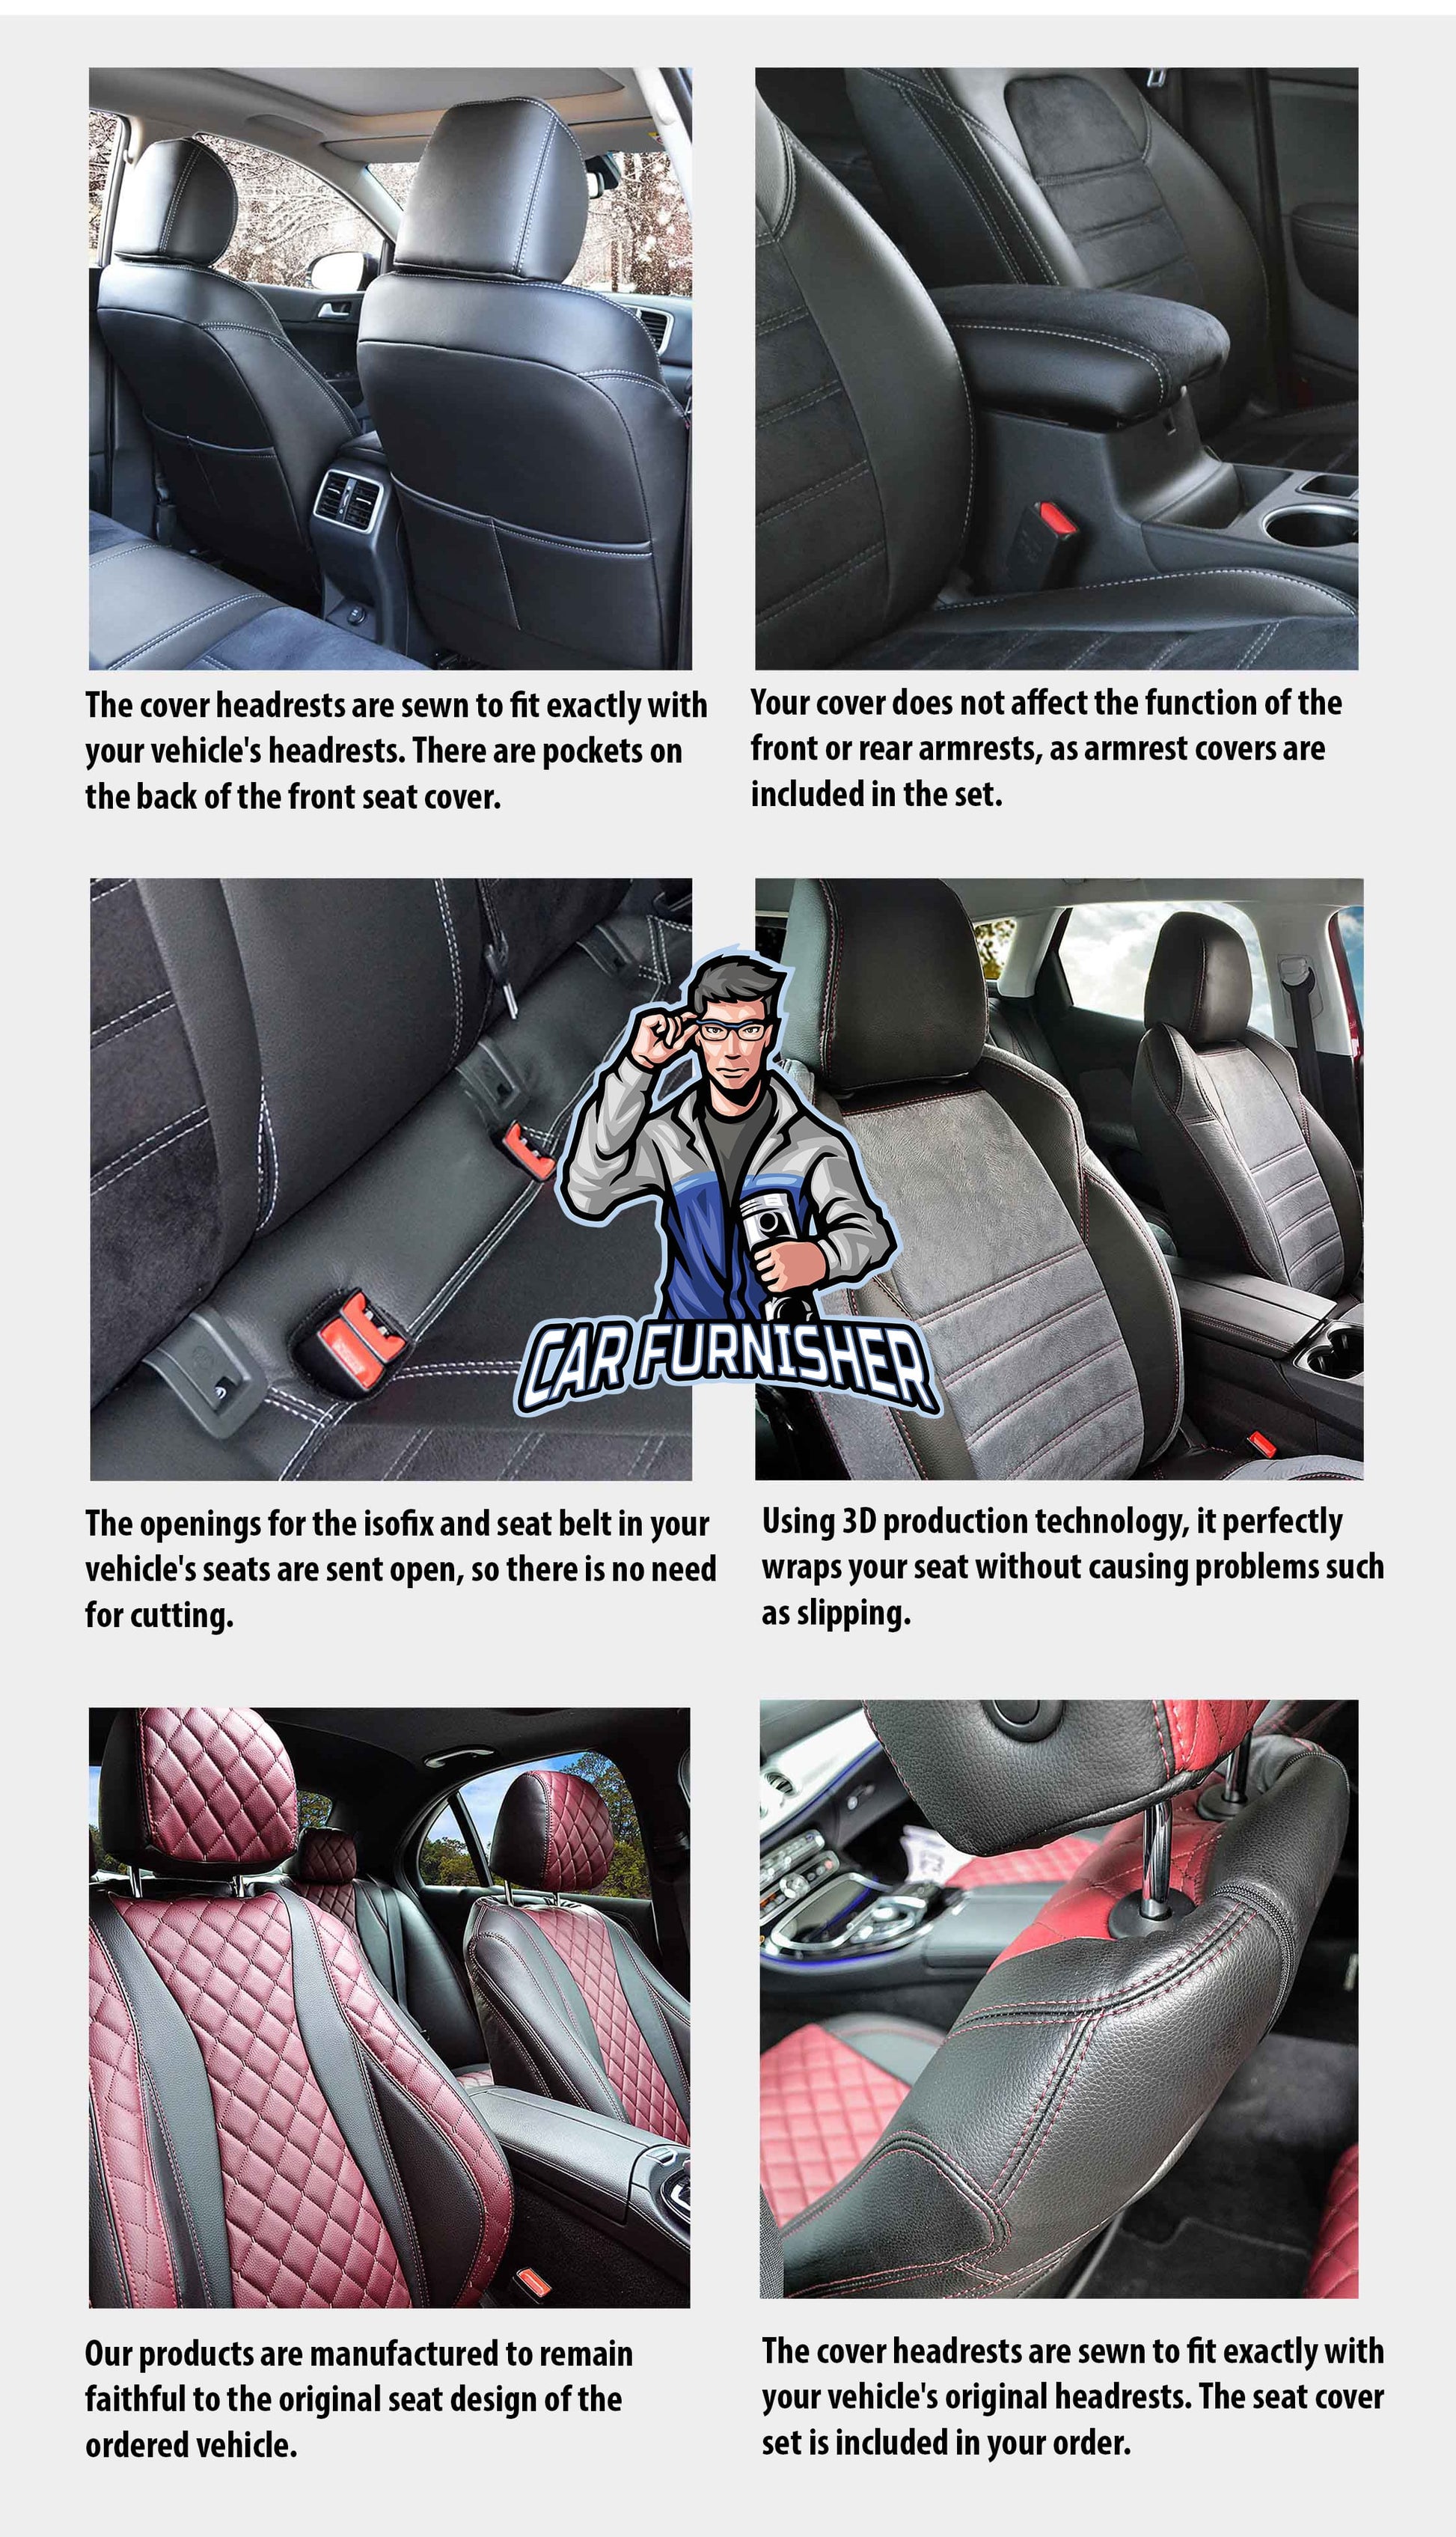 Ford Fiesta Seat Covers Original Jacquard Design Smoked Jacquard Fabric